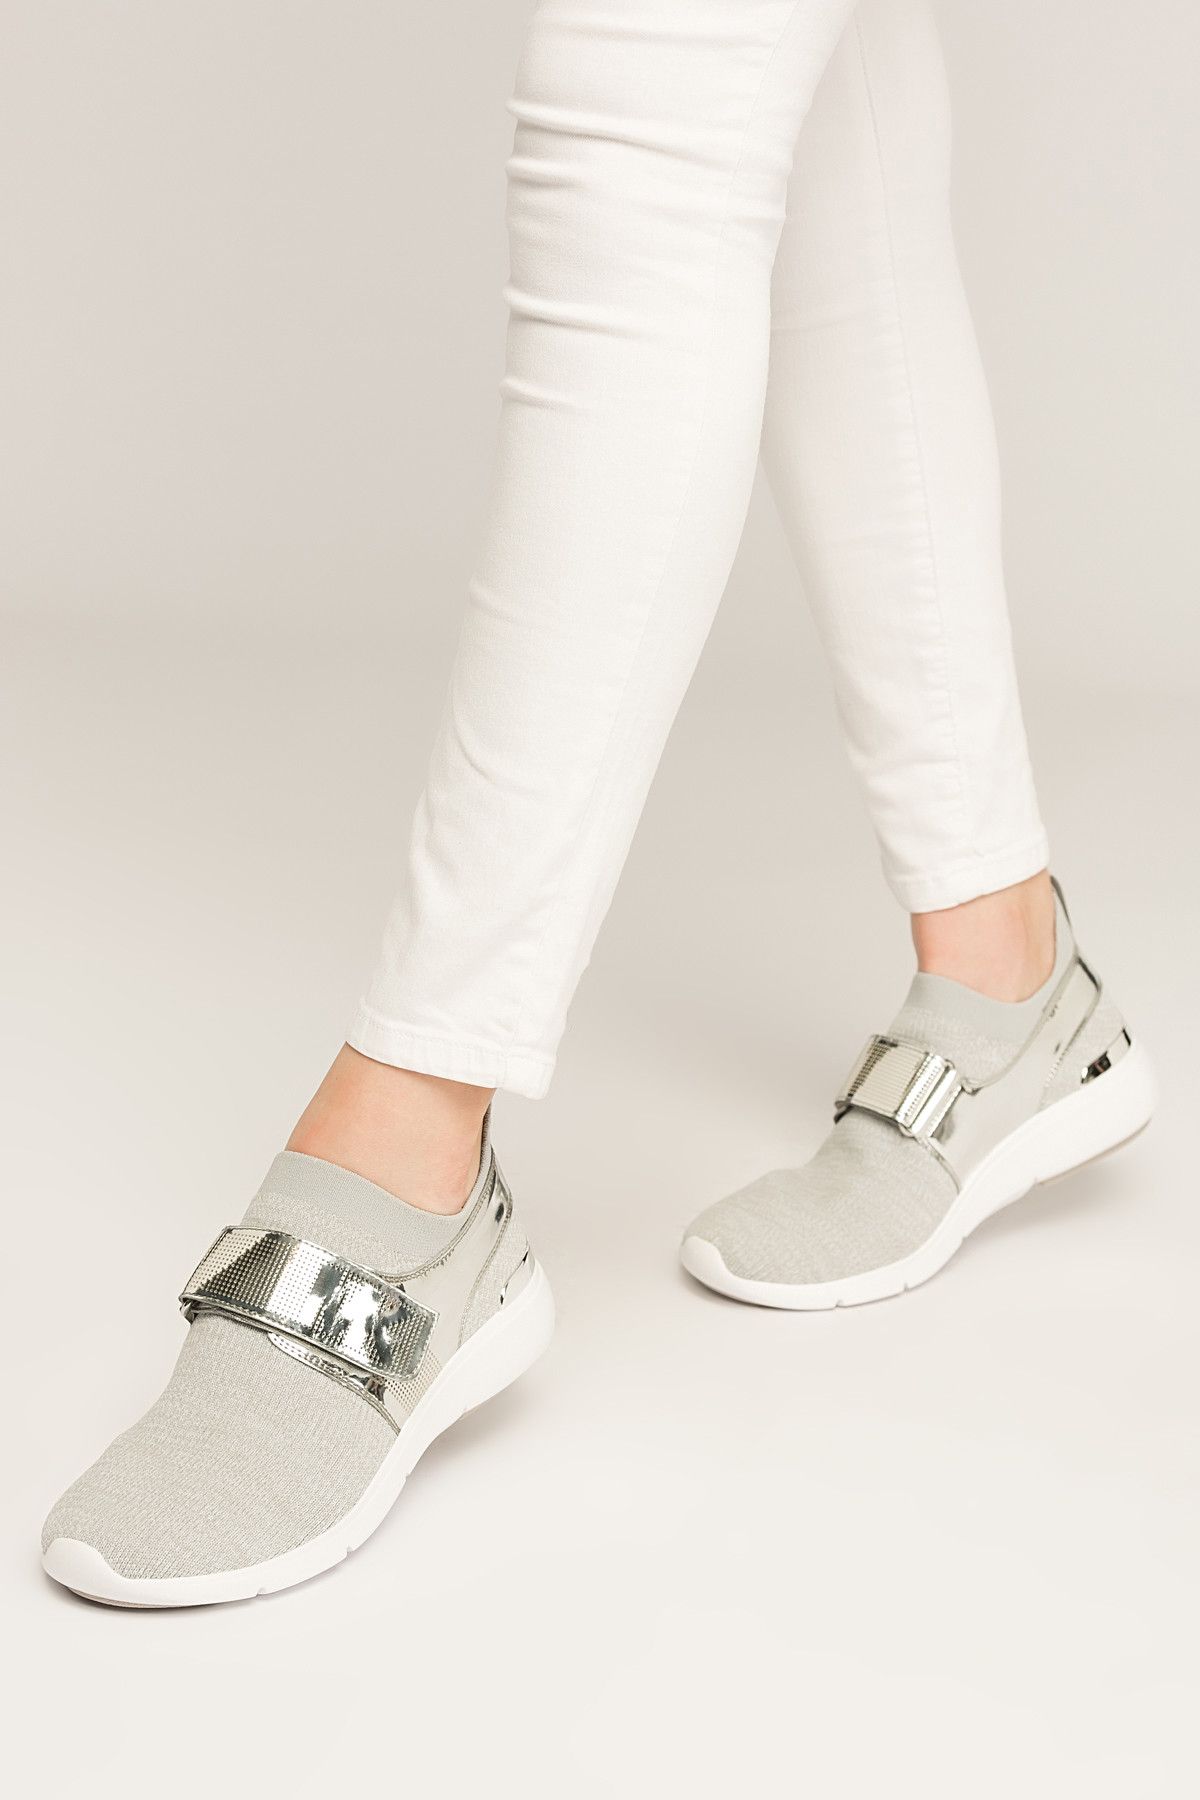 Michael Kors Kadın Gümüş Sneaker 43T7XAFS3D